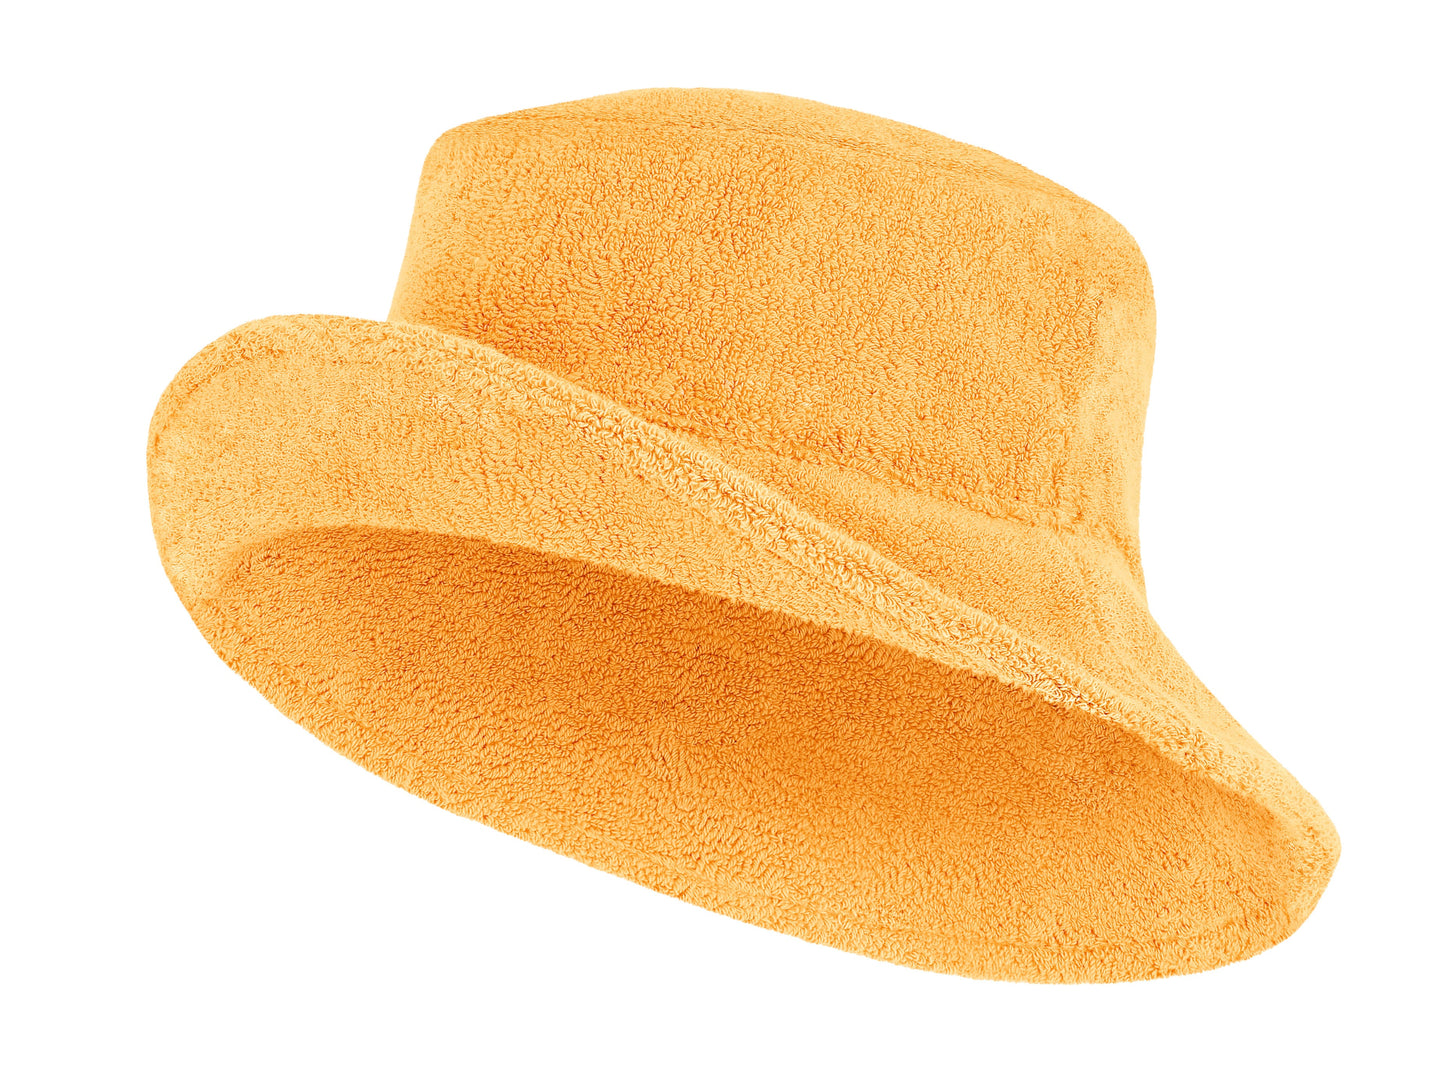 Golden Towelling Beach Hat